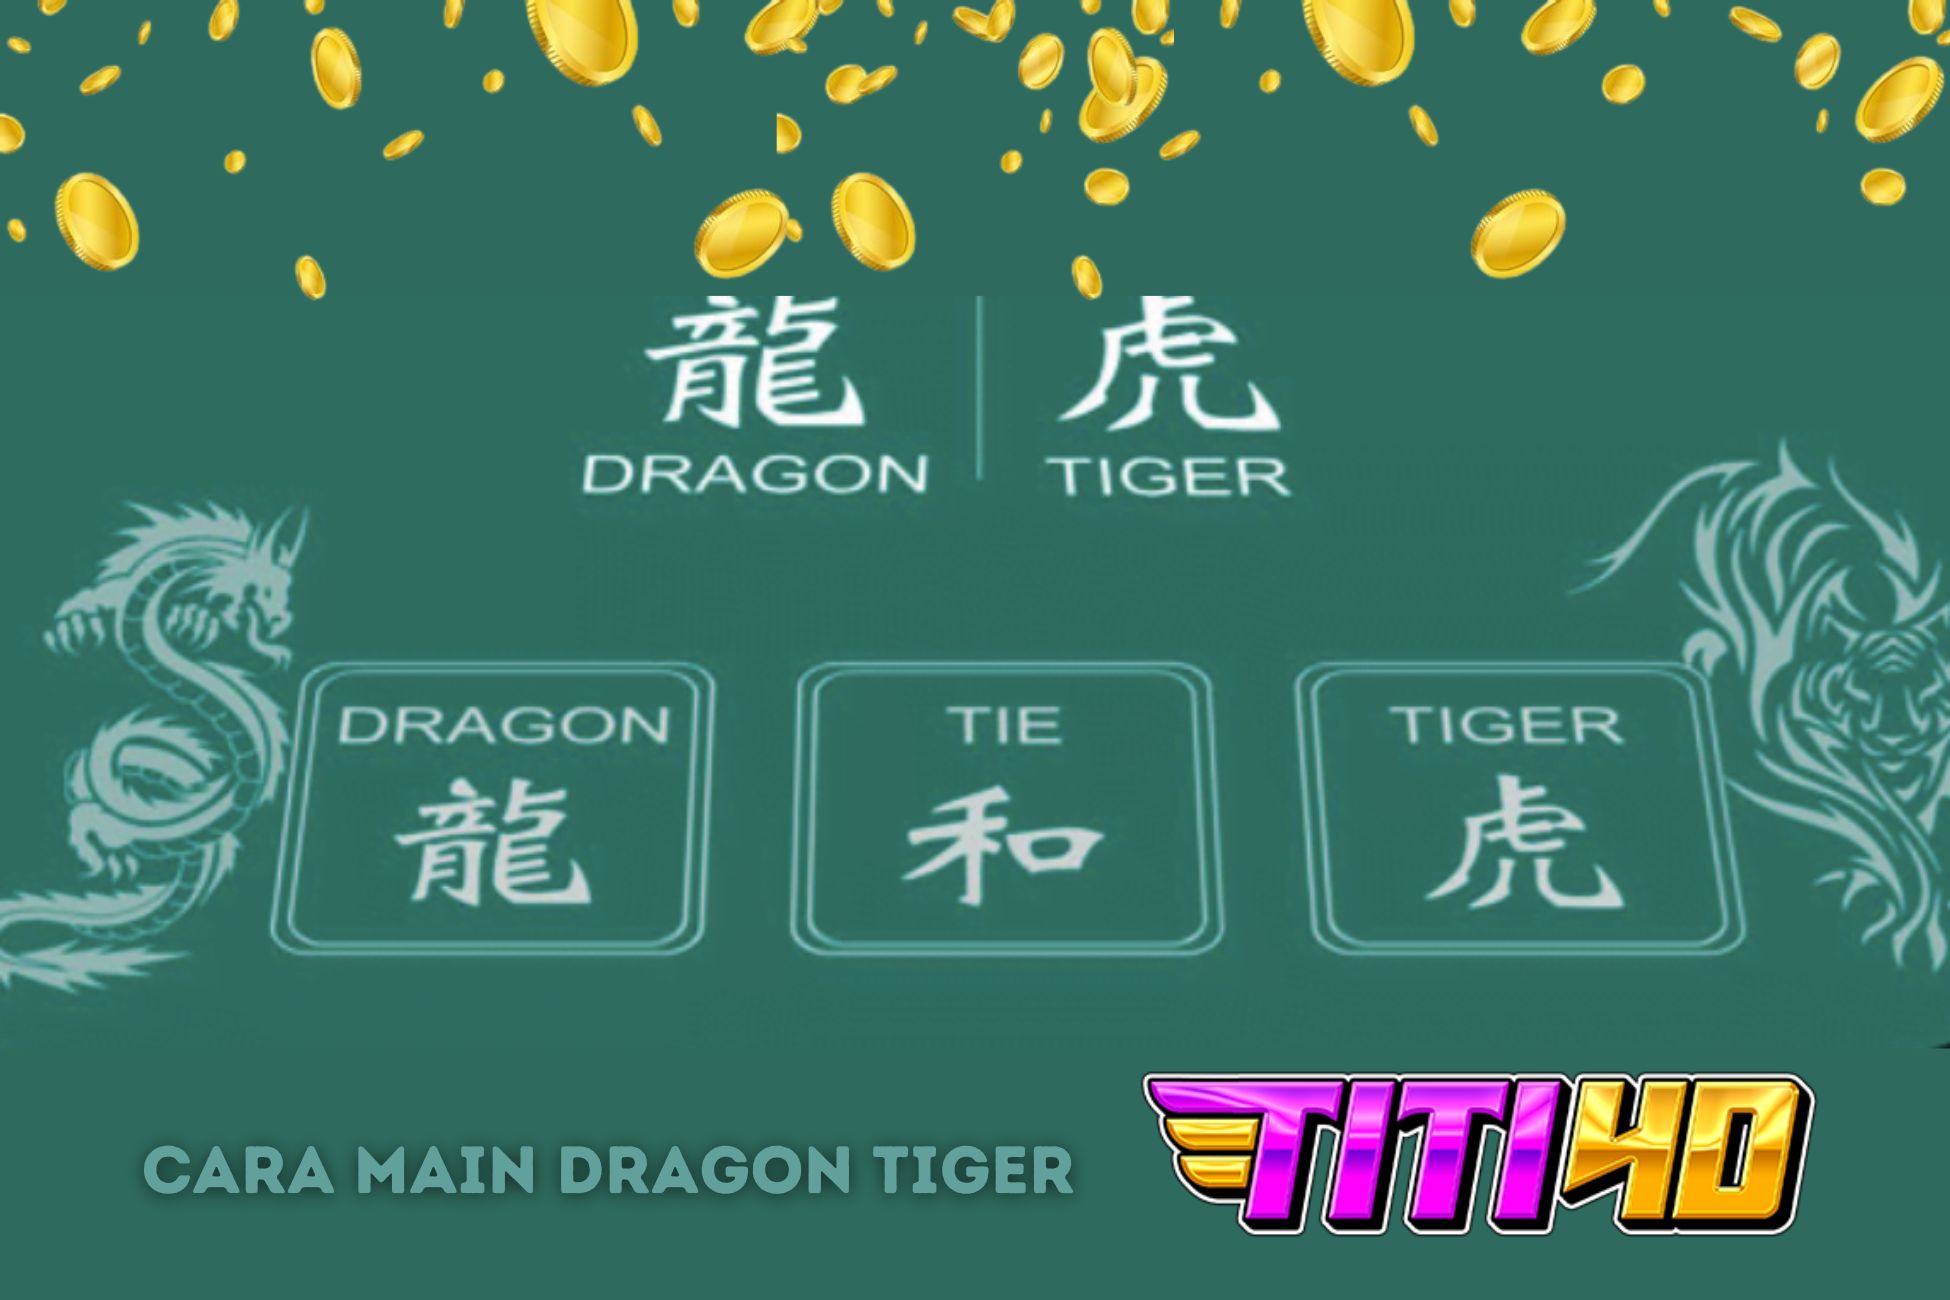 Cara Main Dragon Tiger Titi4D